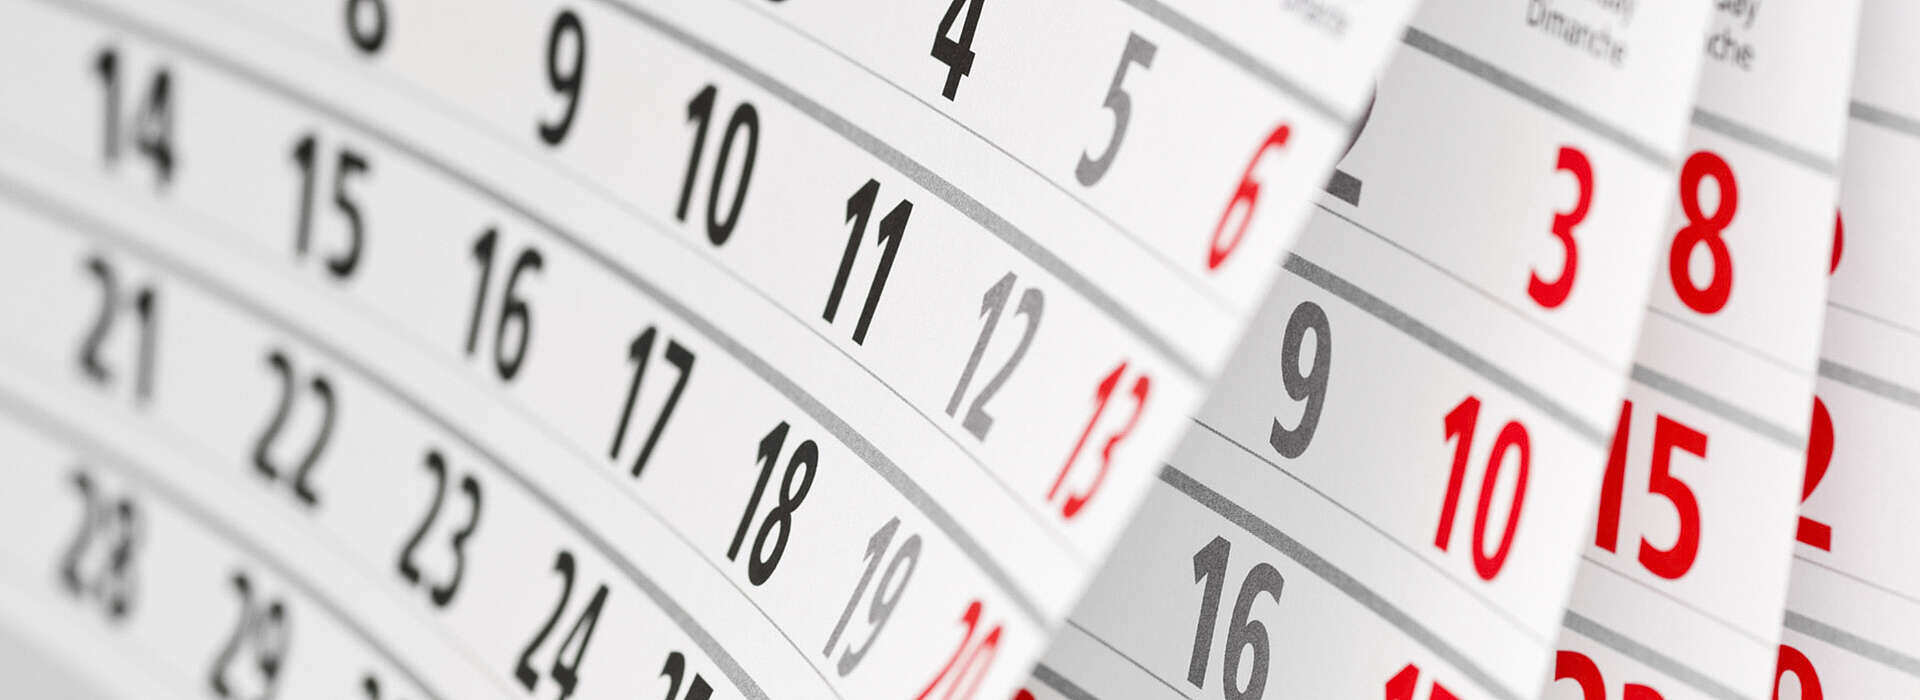 Csm Calendar 2022 October 2022 Calendar